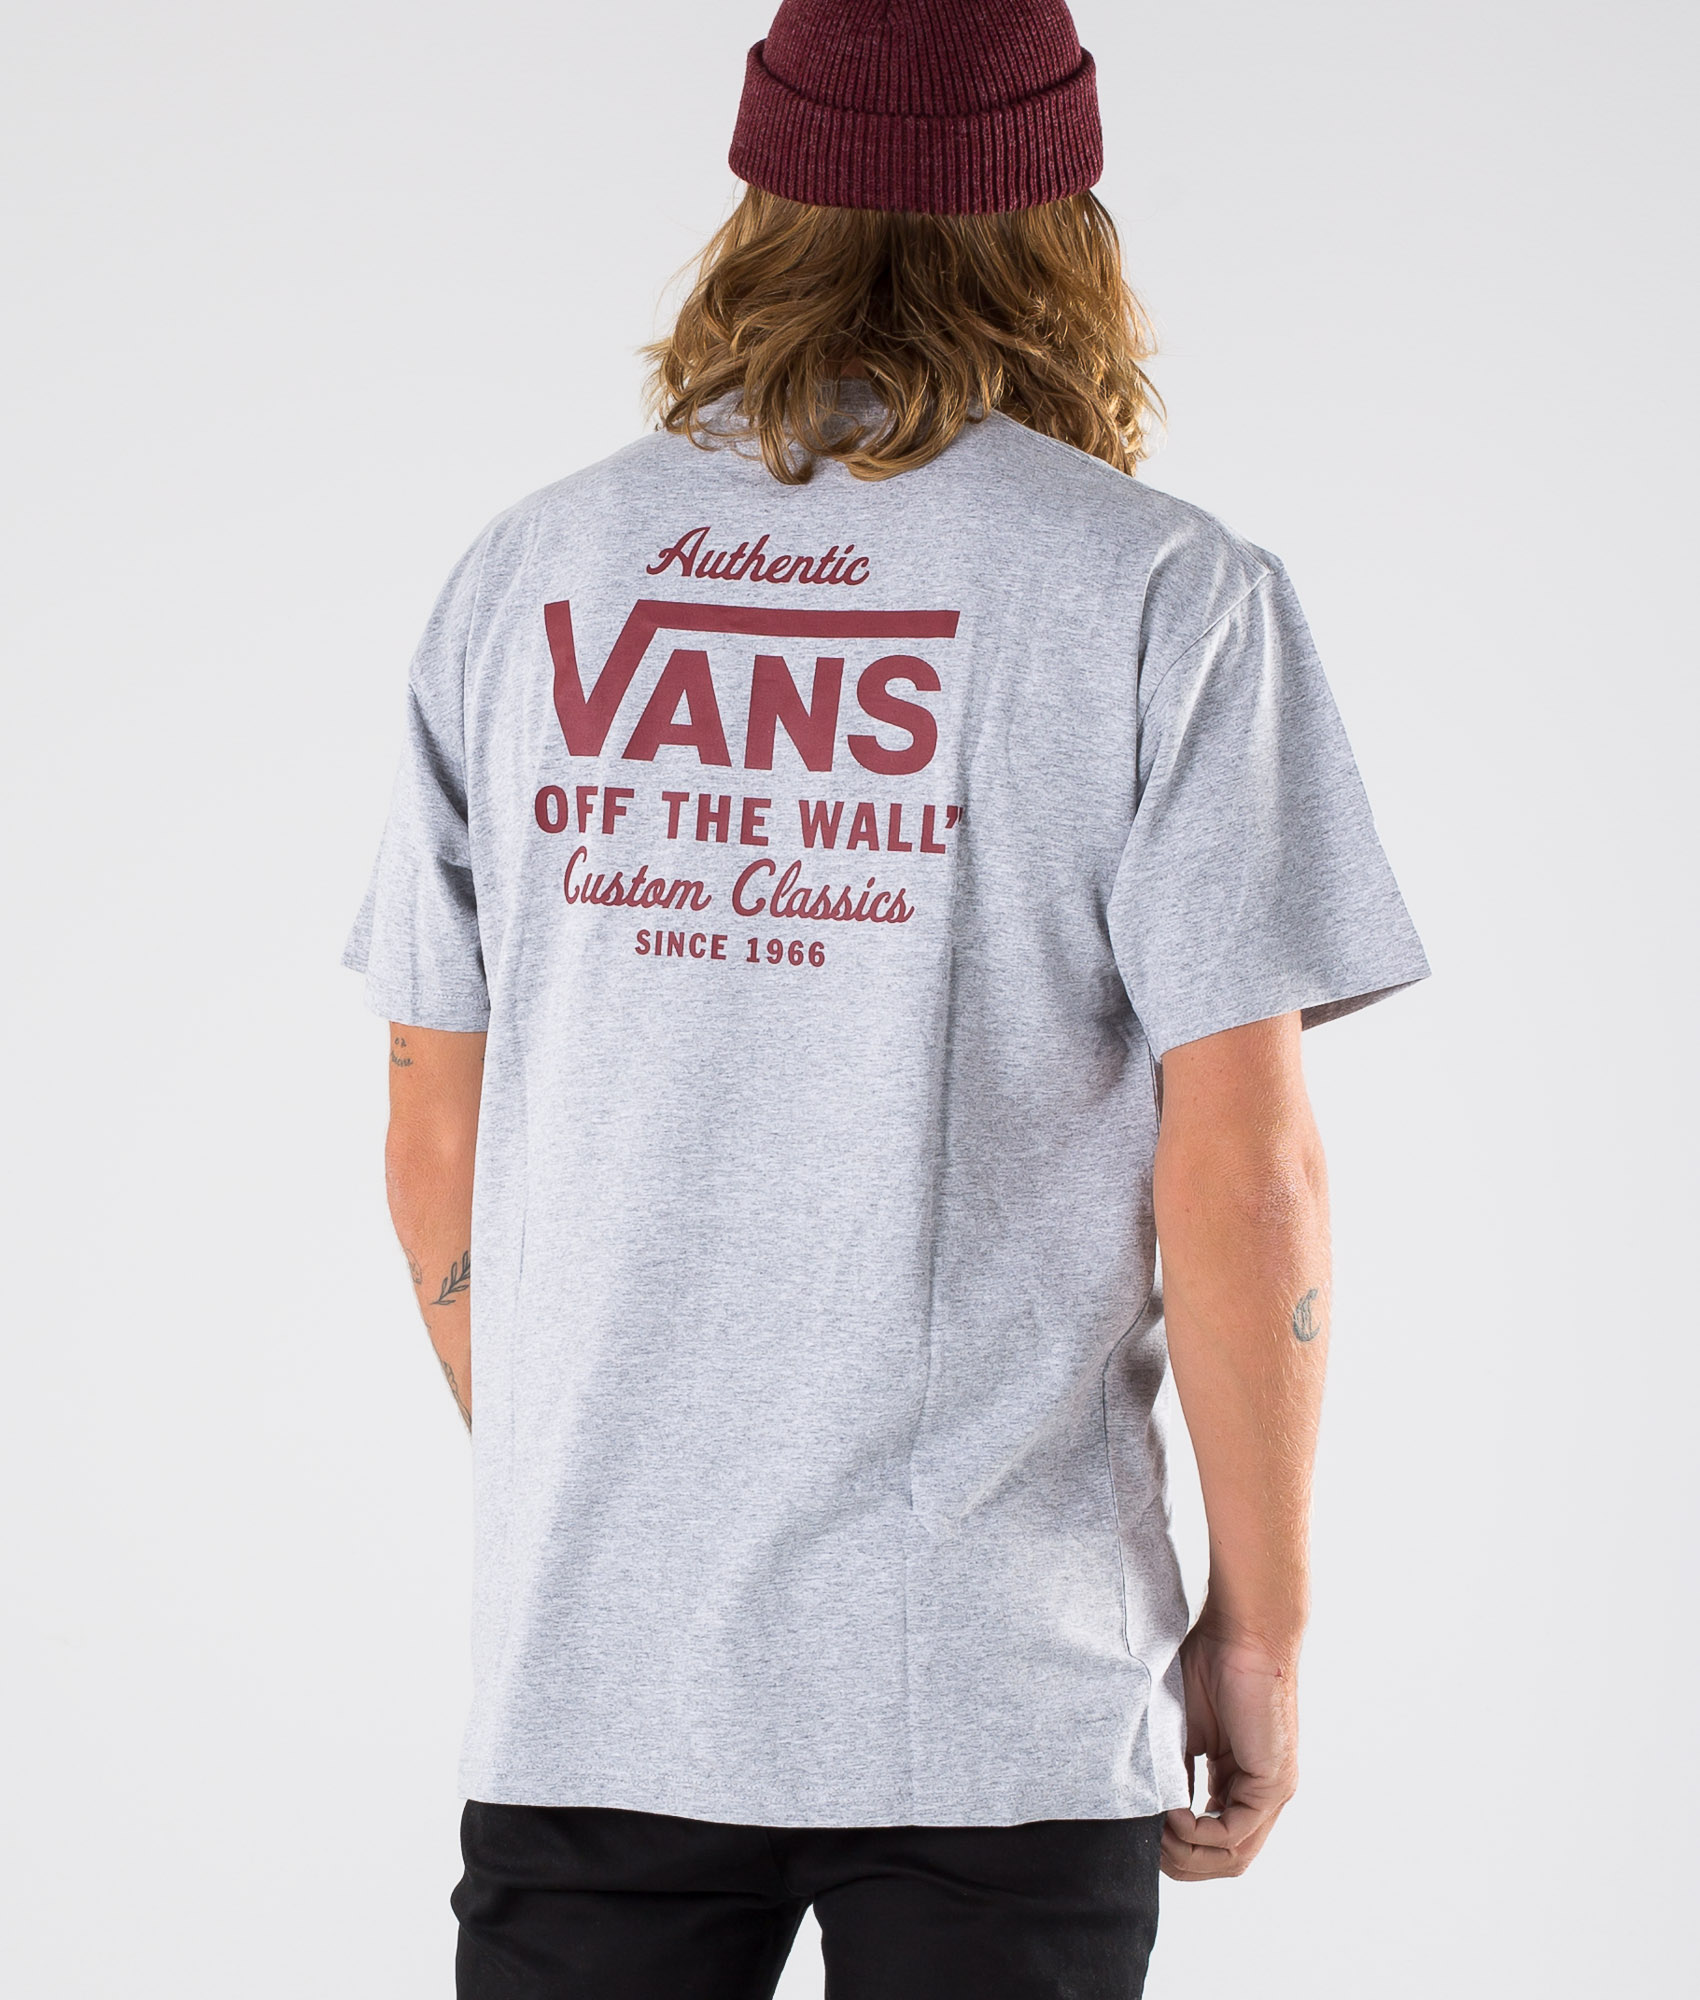 vans custom t shirt